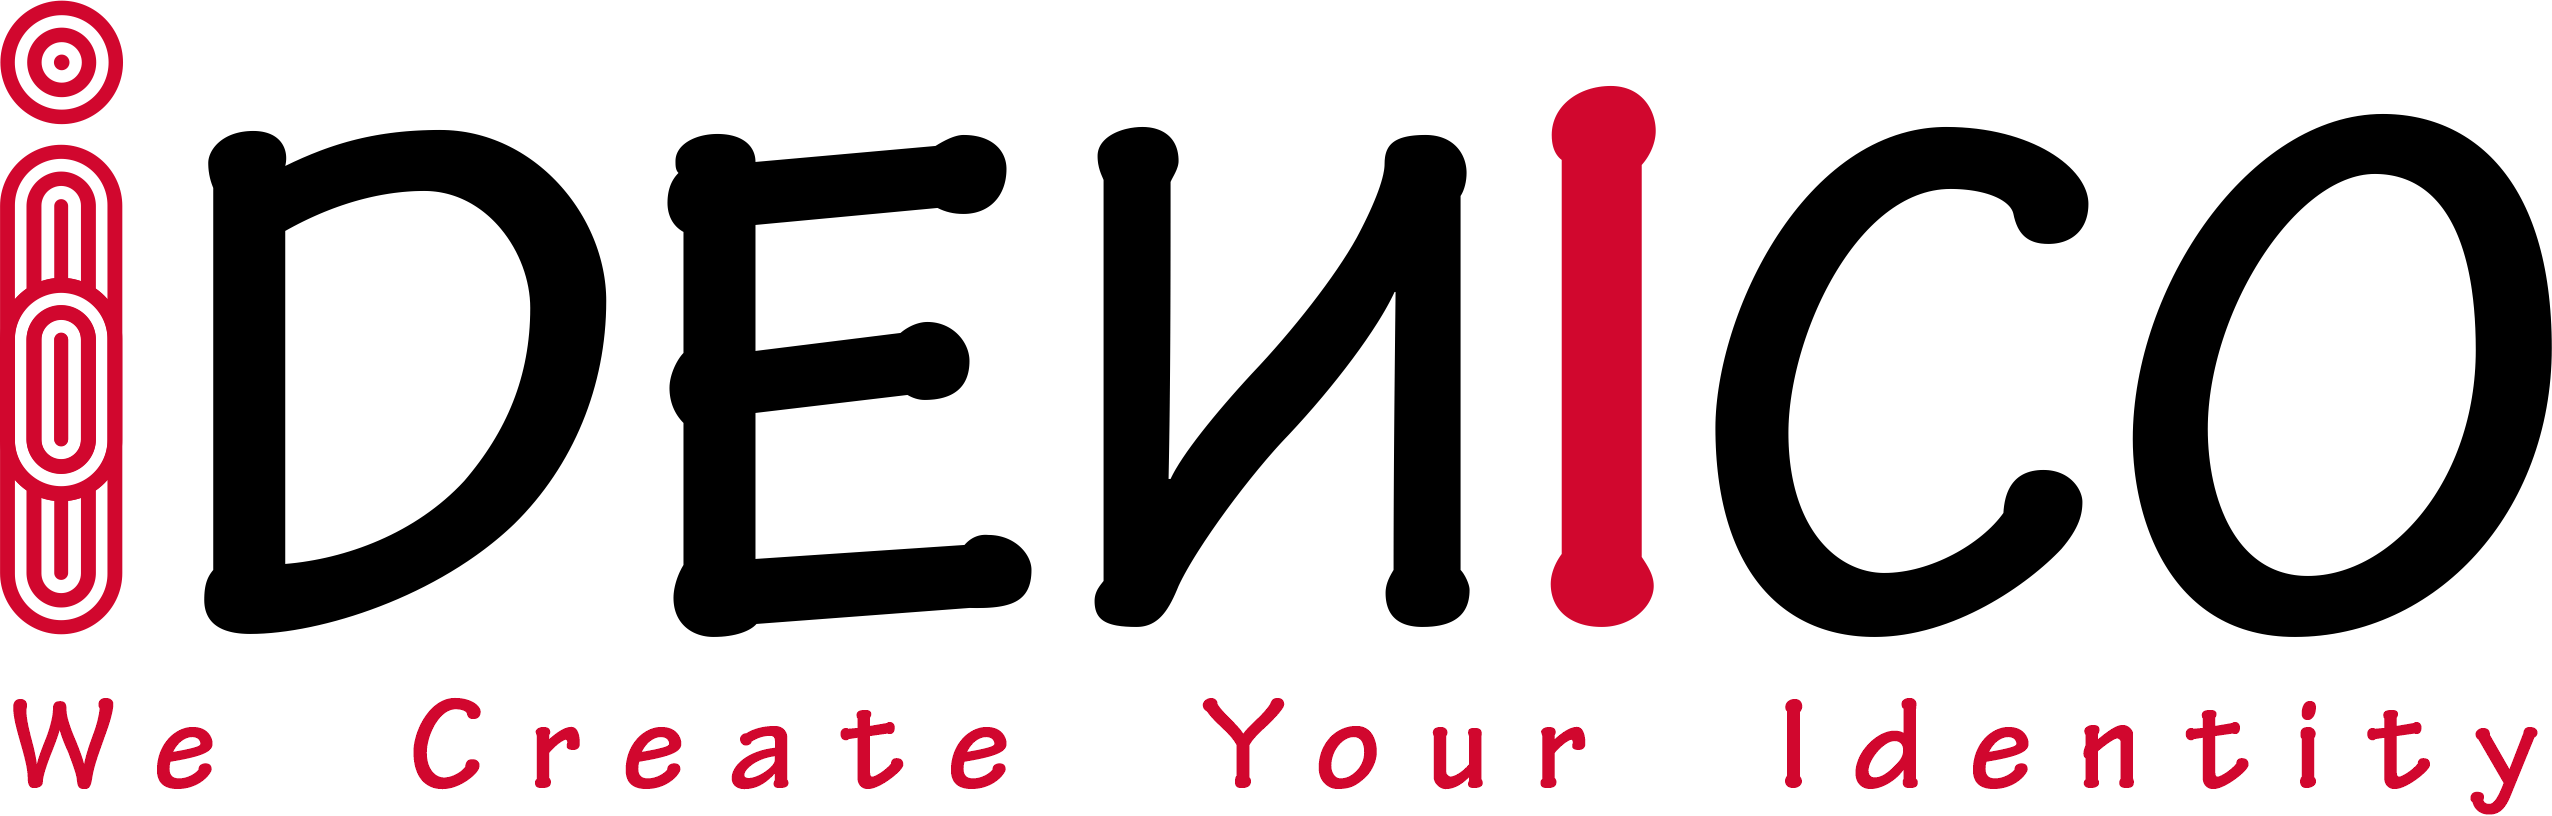 Idenico logo